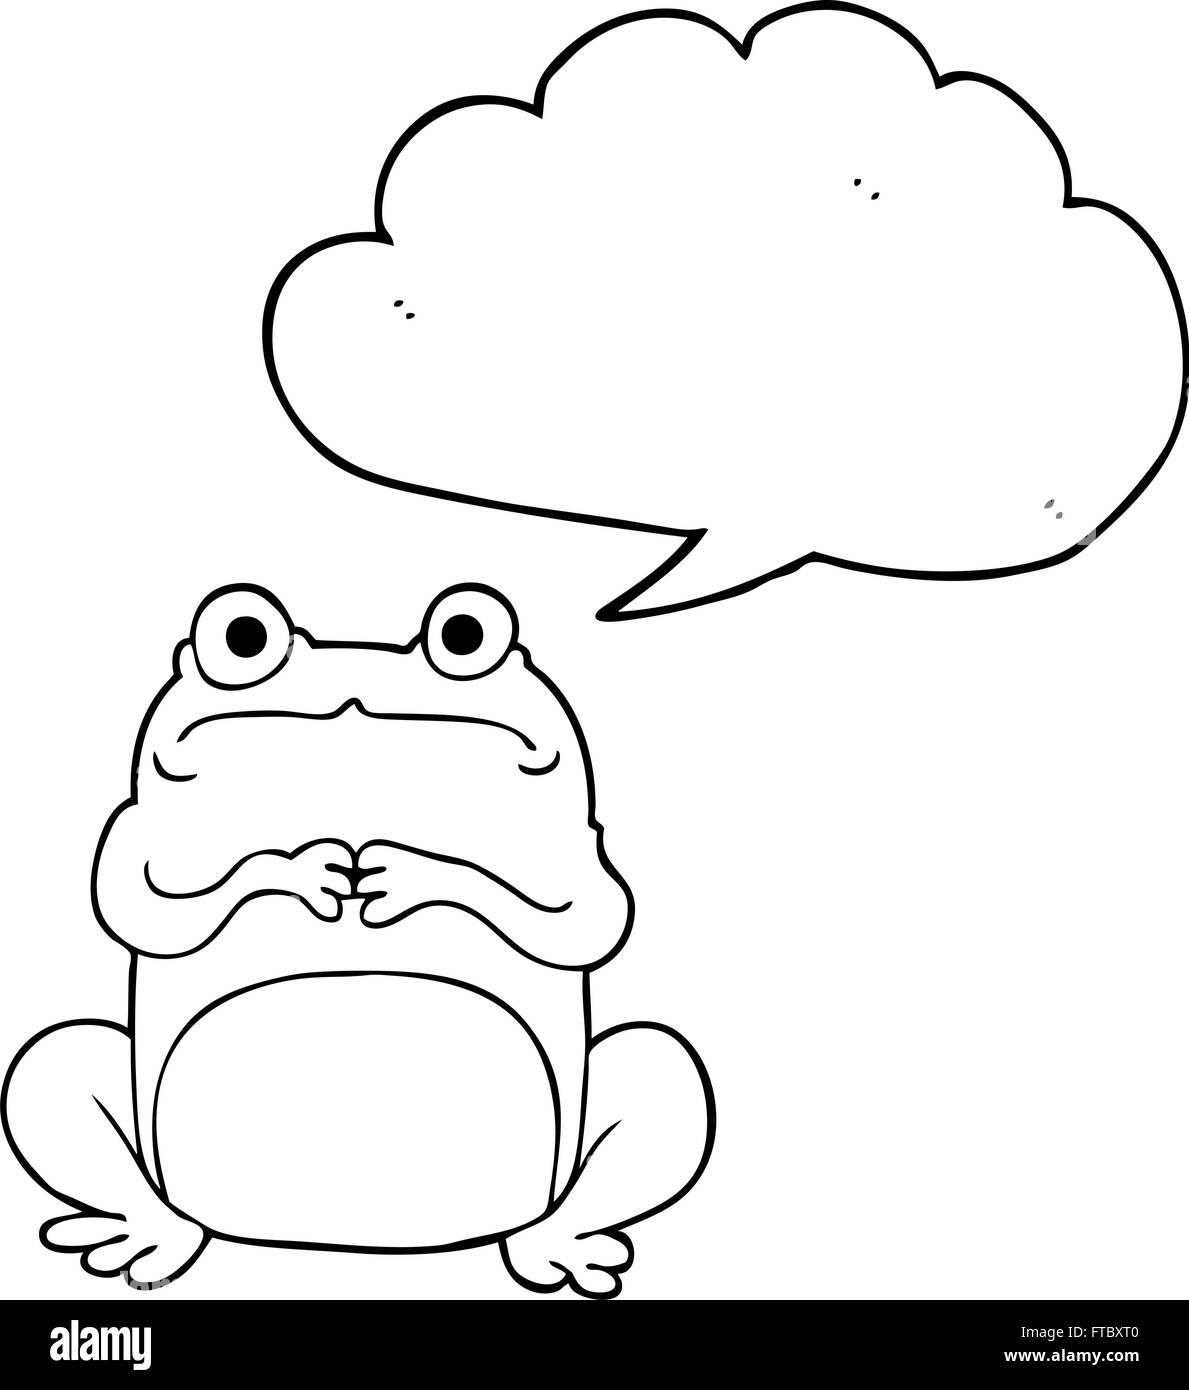 freehand drawn speech bubble cartoon nervous frog Stock Vector